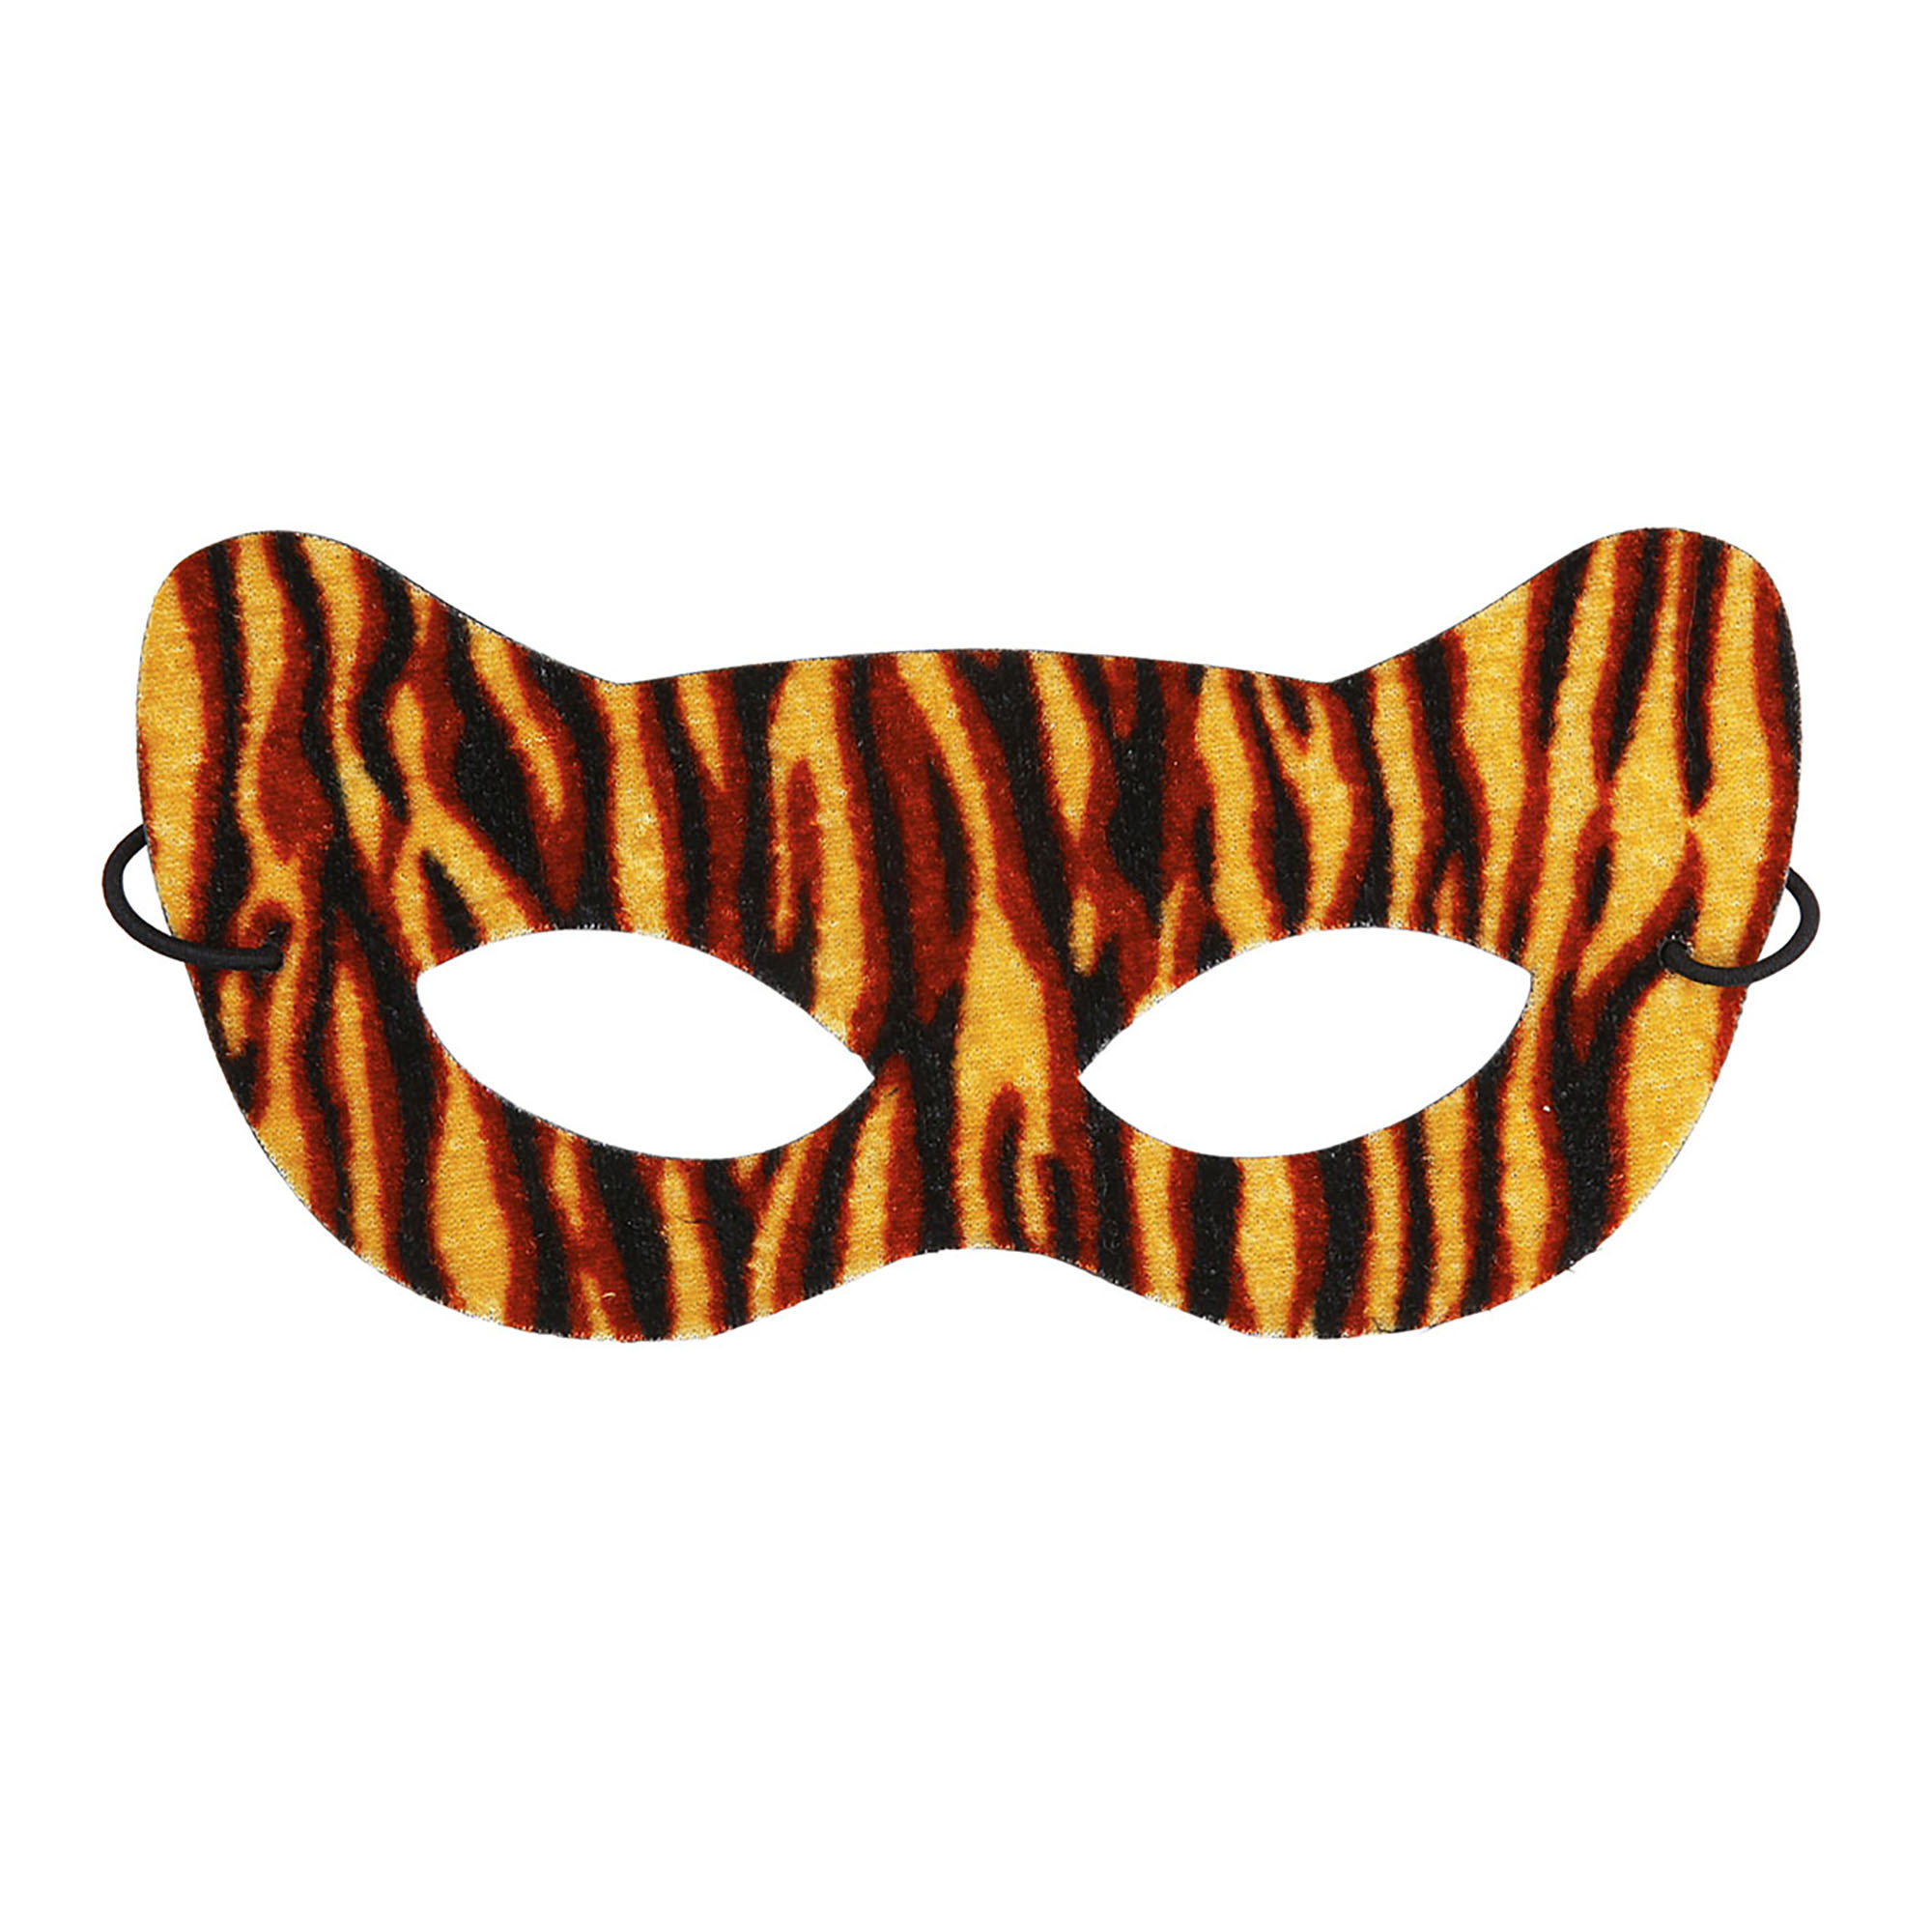 Oogmasker tijger